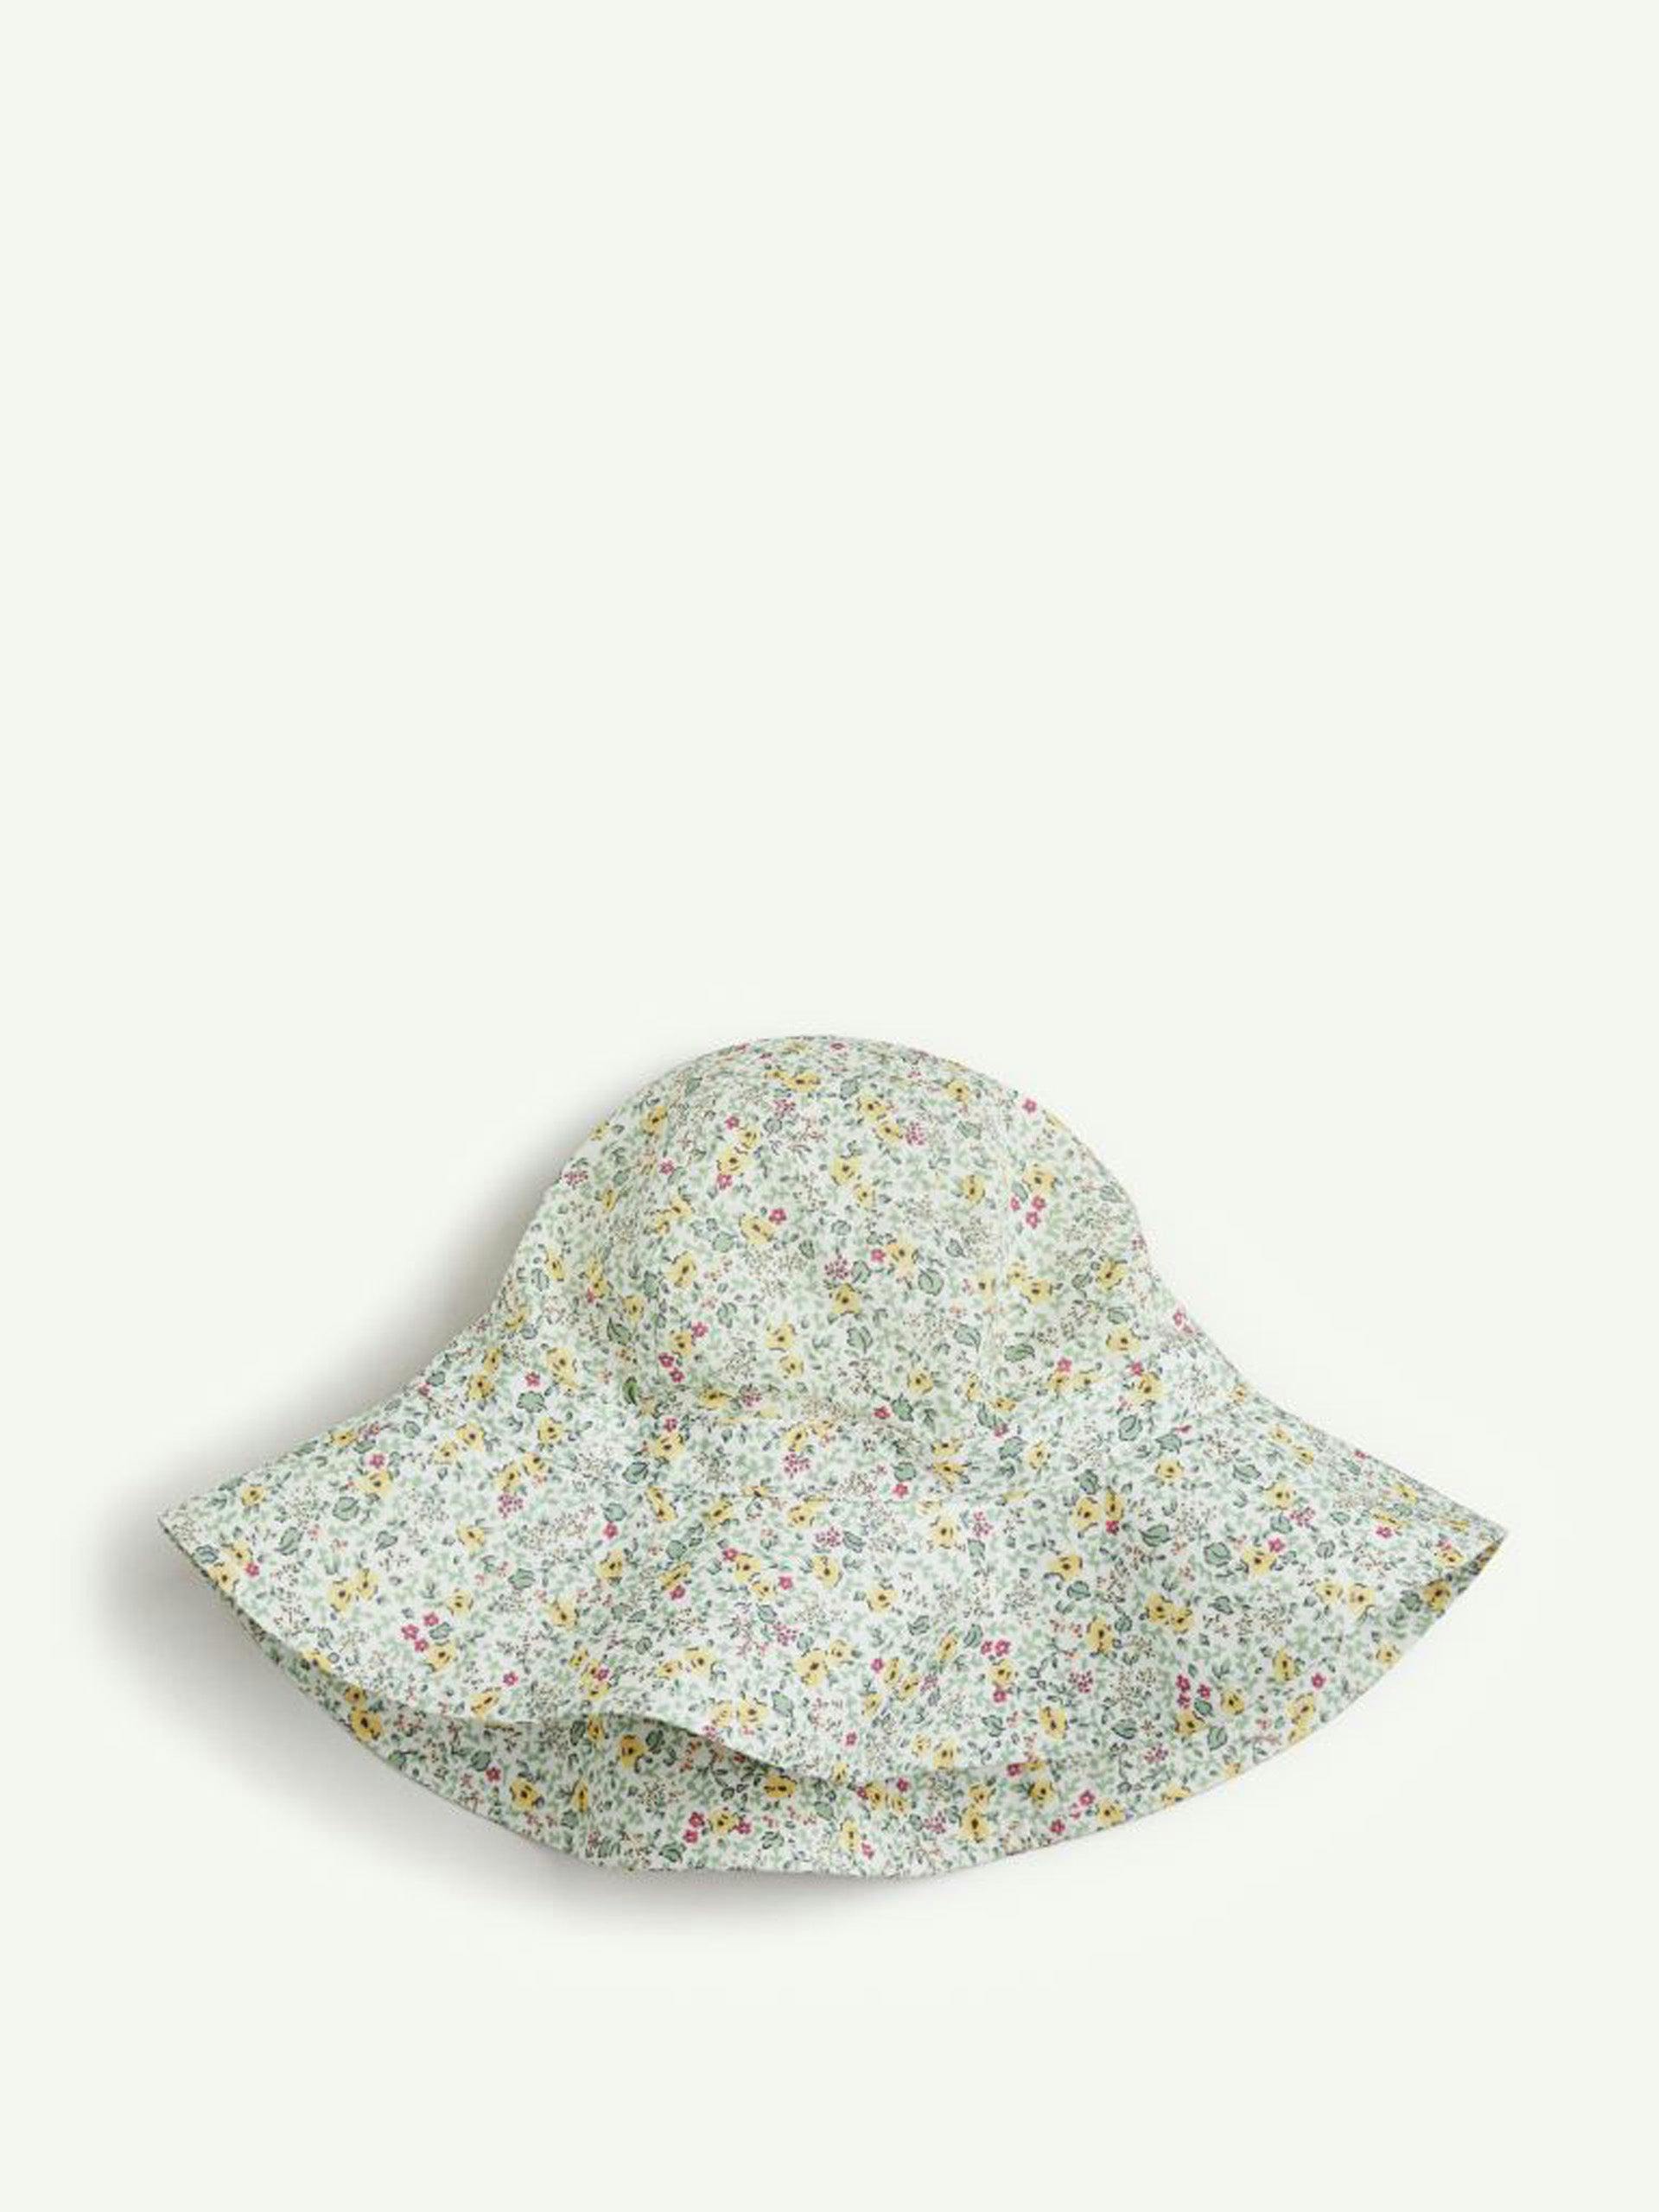 Floral-patterned sun hat